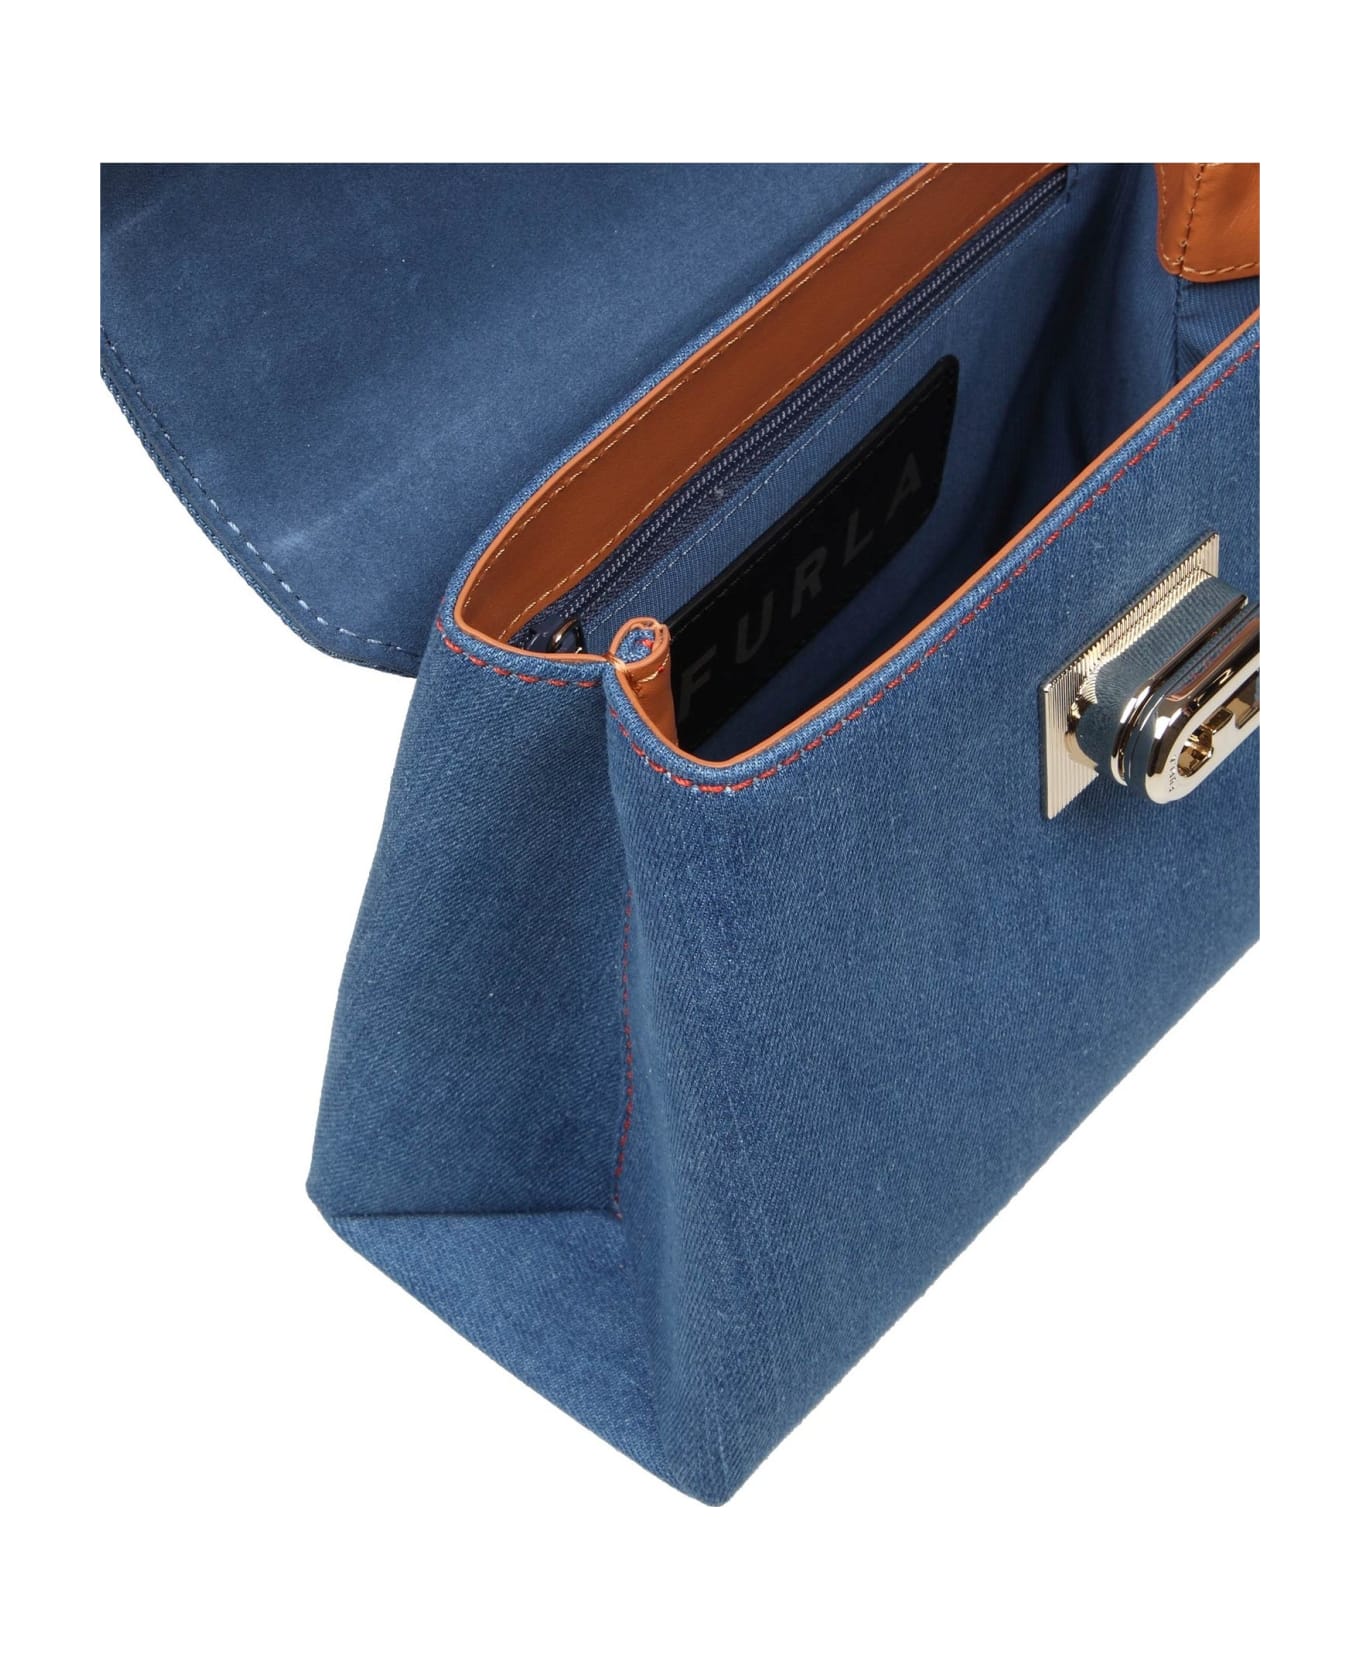 Furla 1927 Mini Handbag In Blue Jeans Fabric - Mediterranean blue